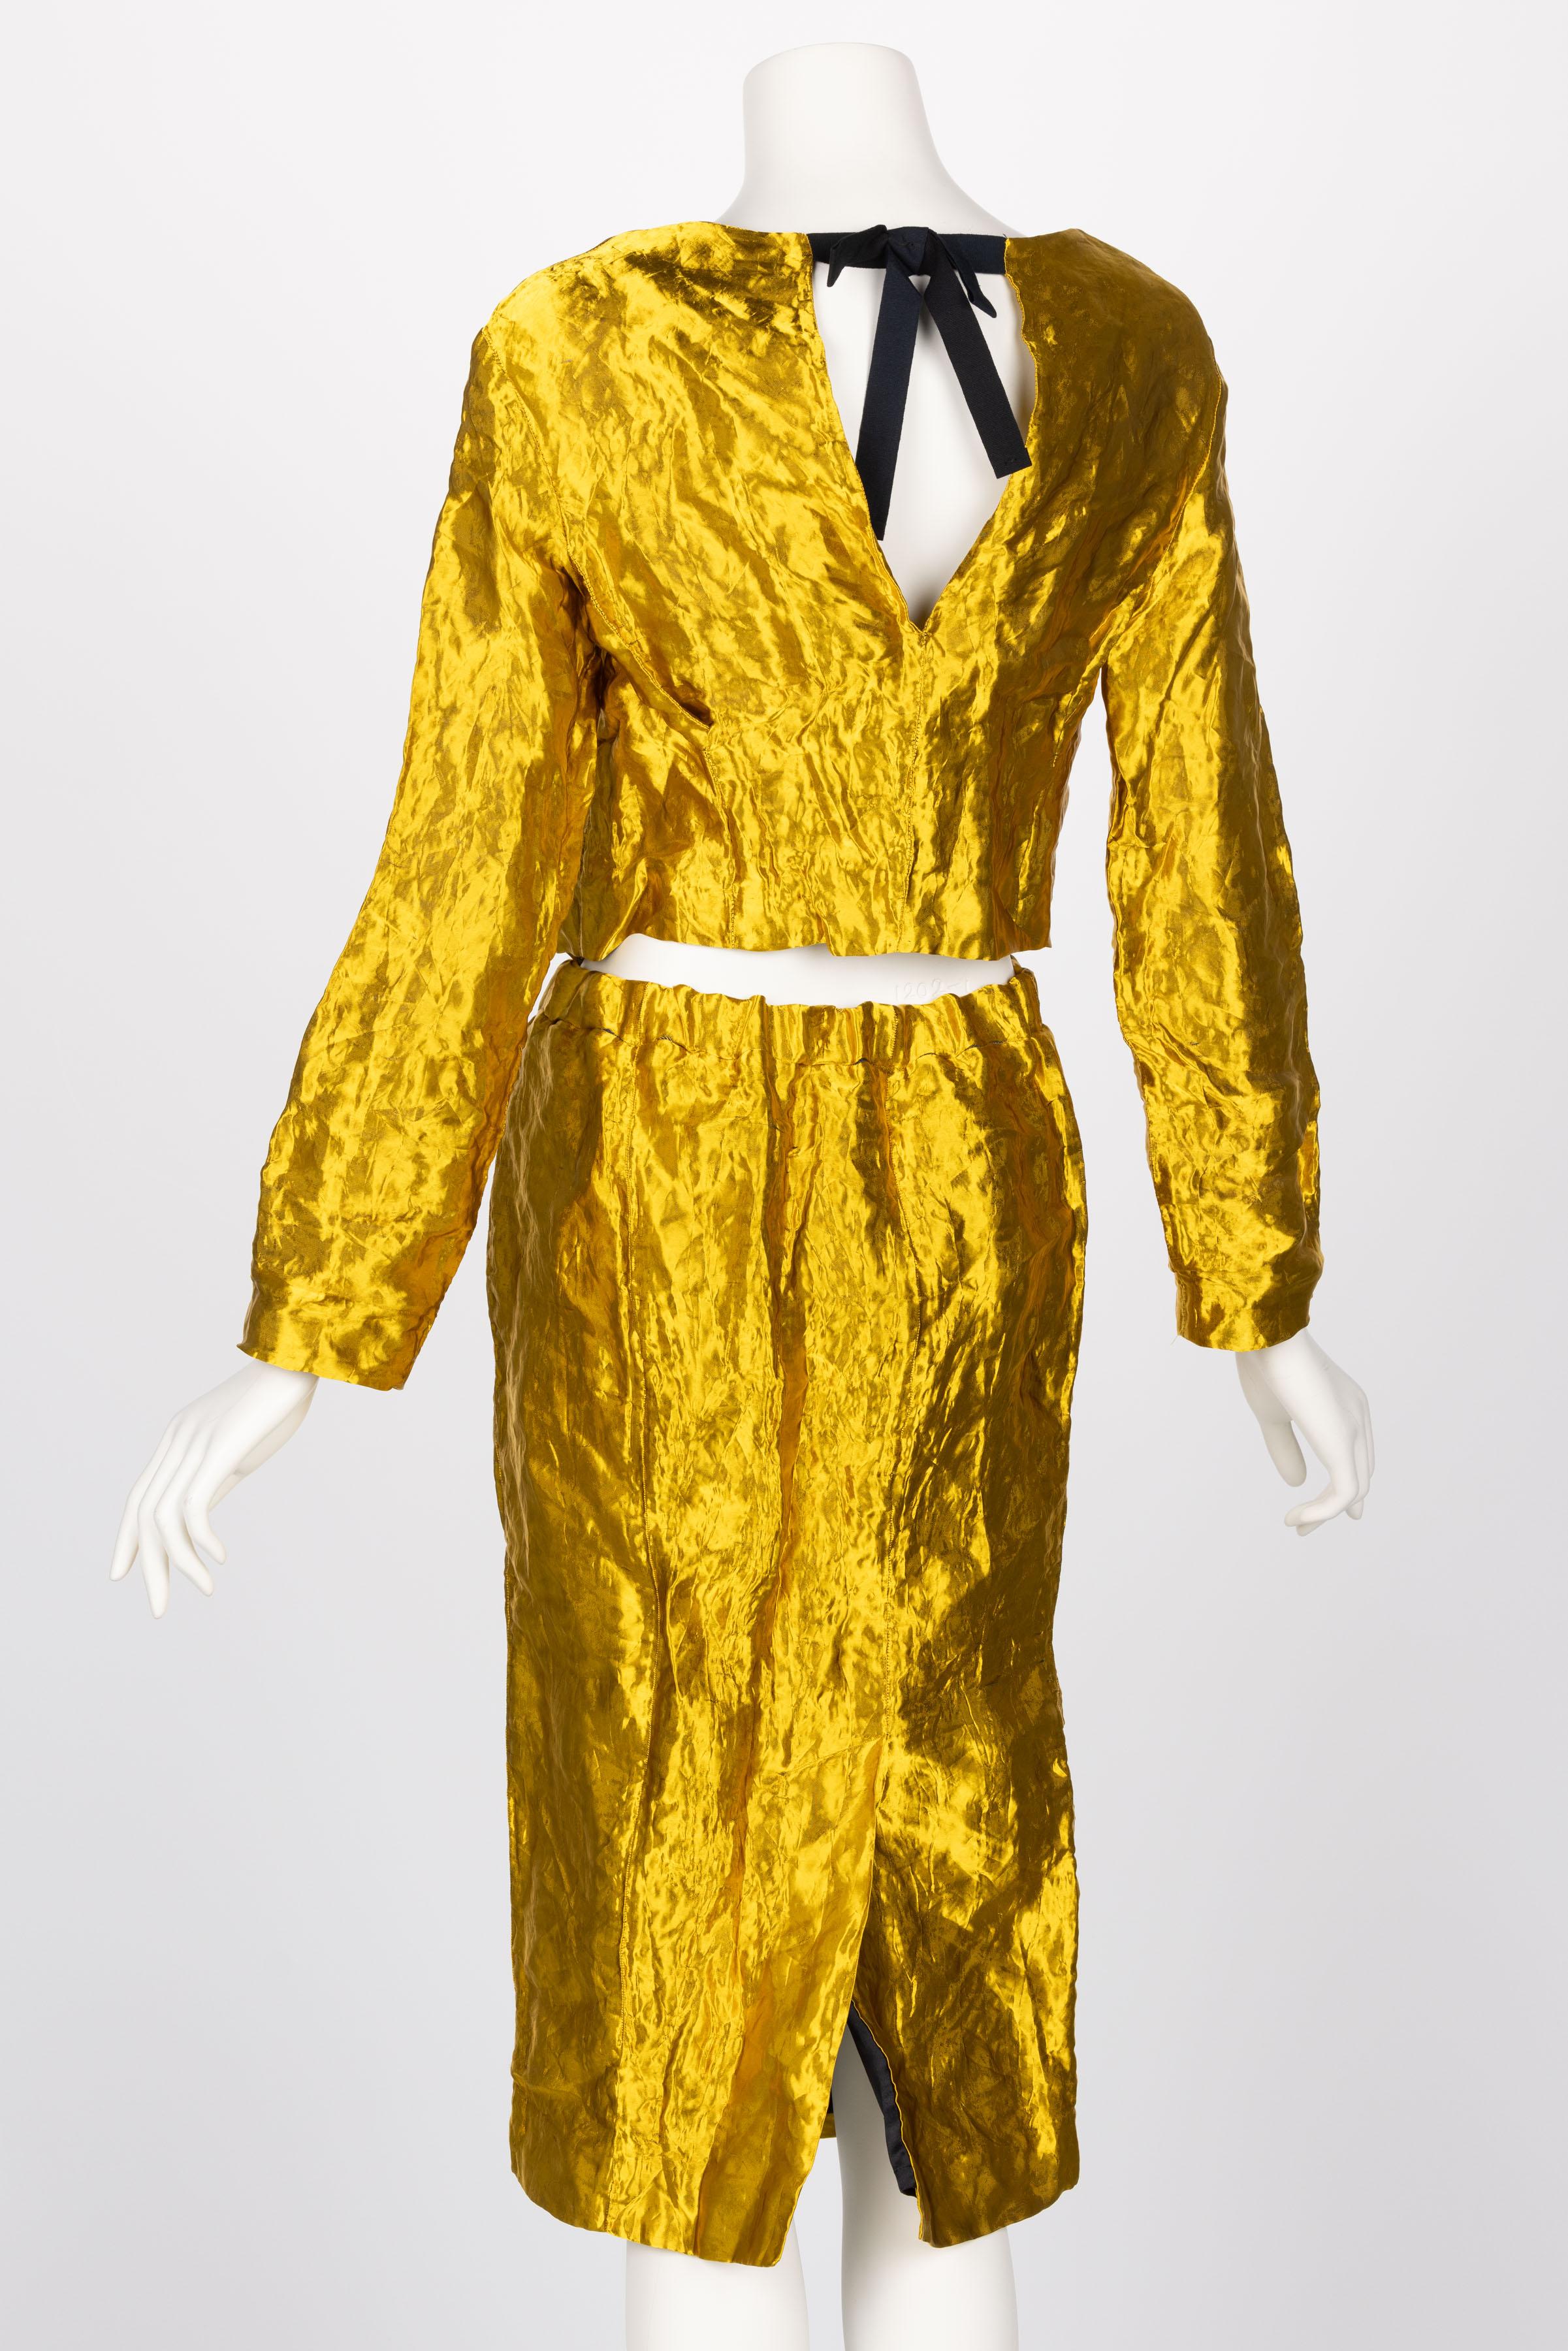 Prada Gold Metal Jacket Top & Skirt Set Spring 2009 For Sale 1